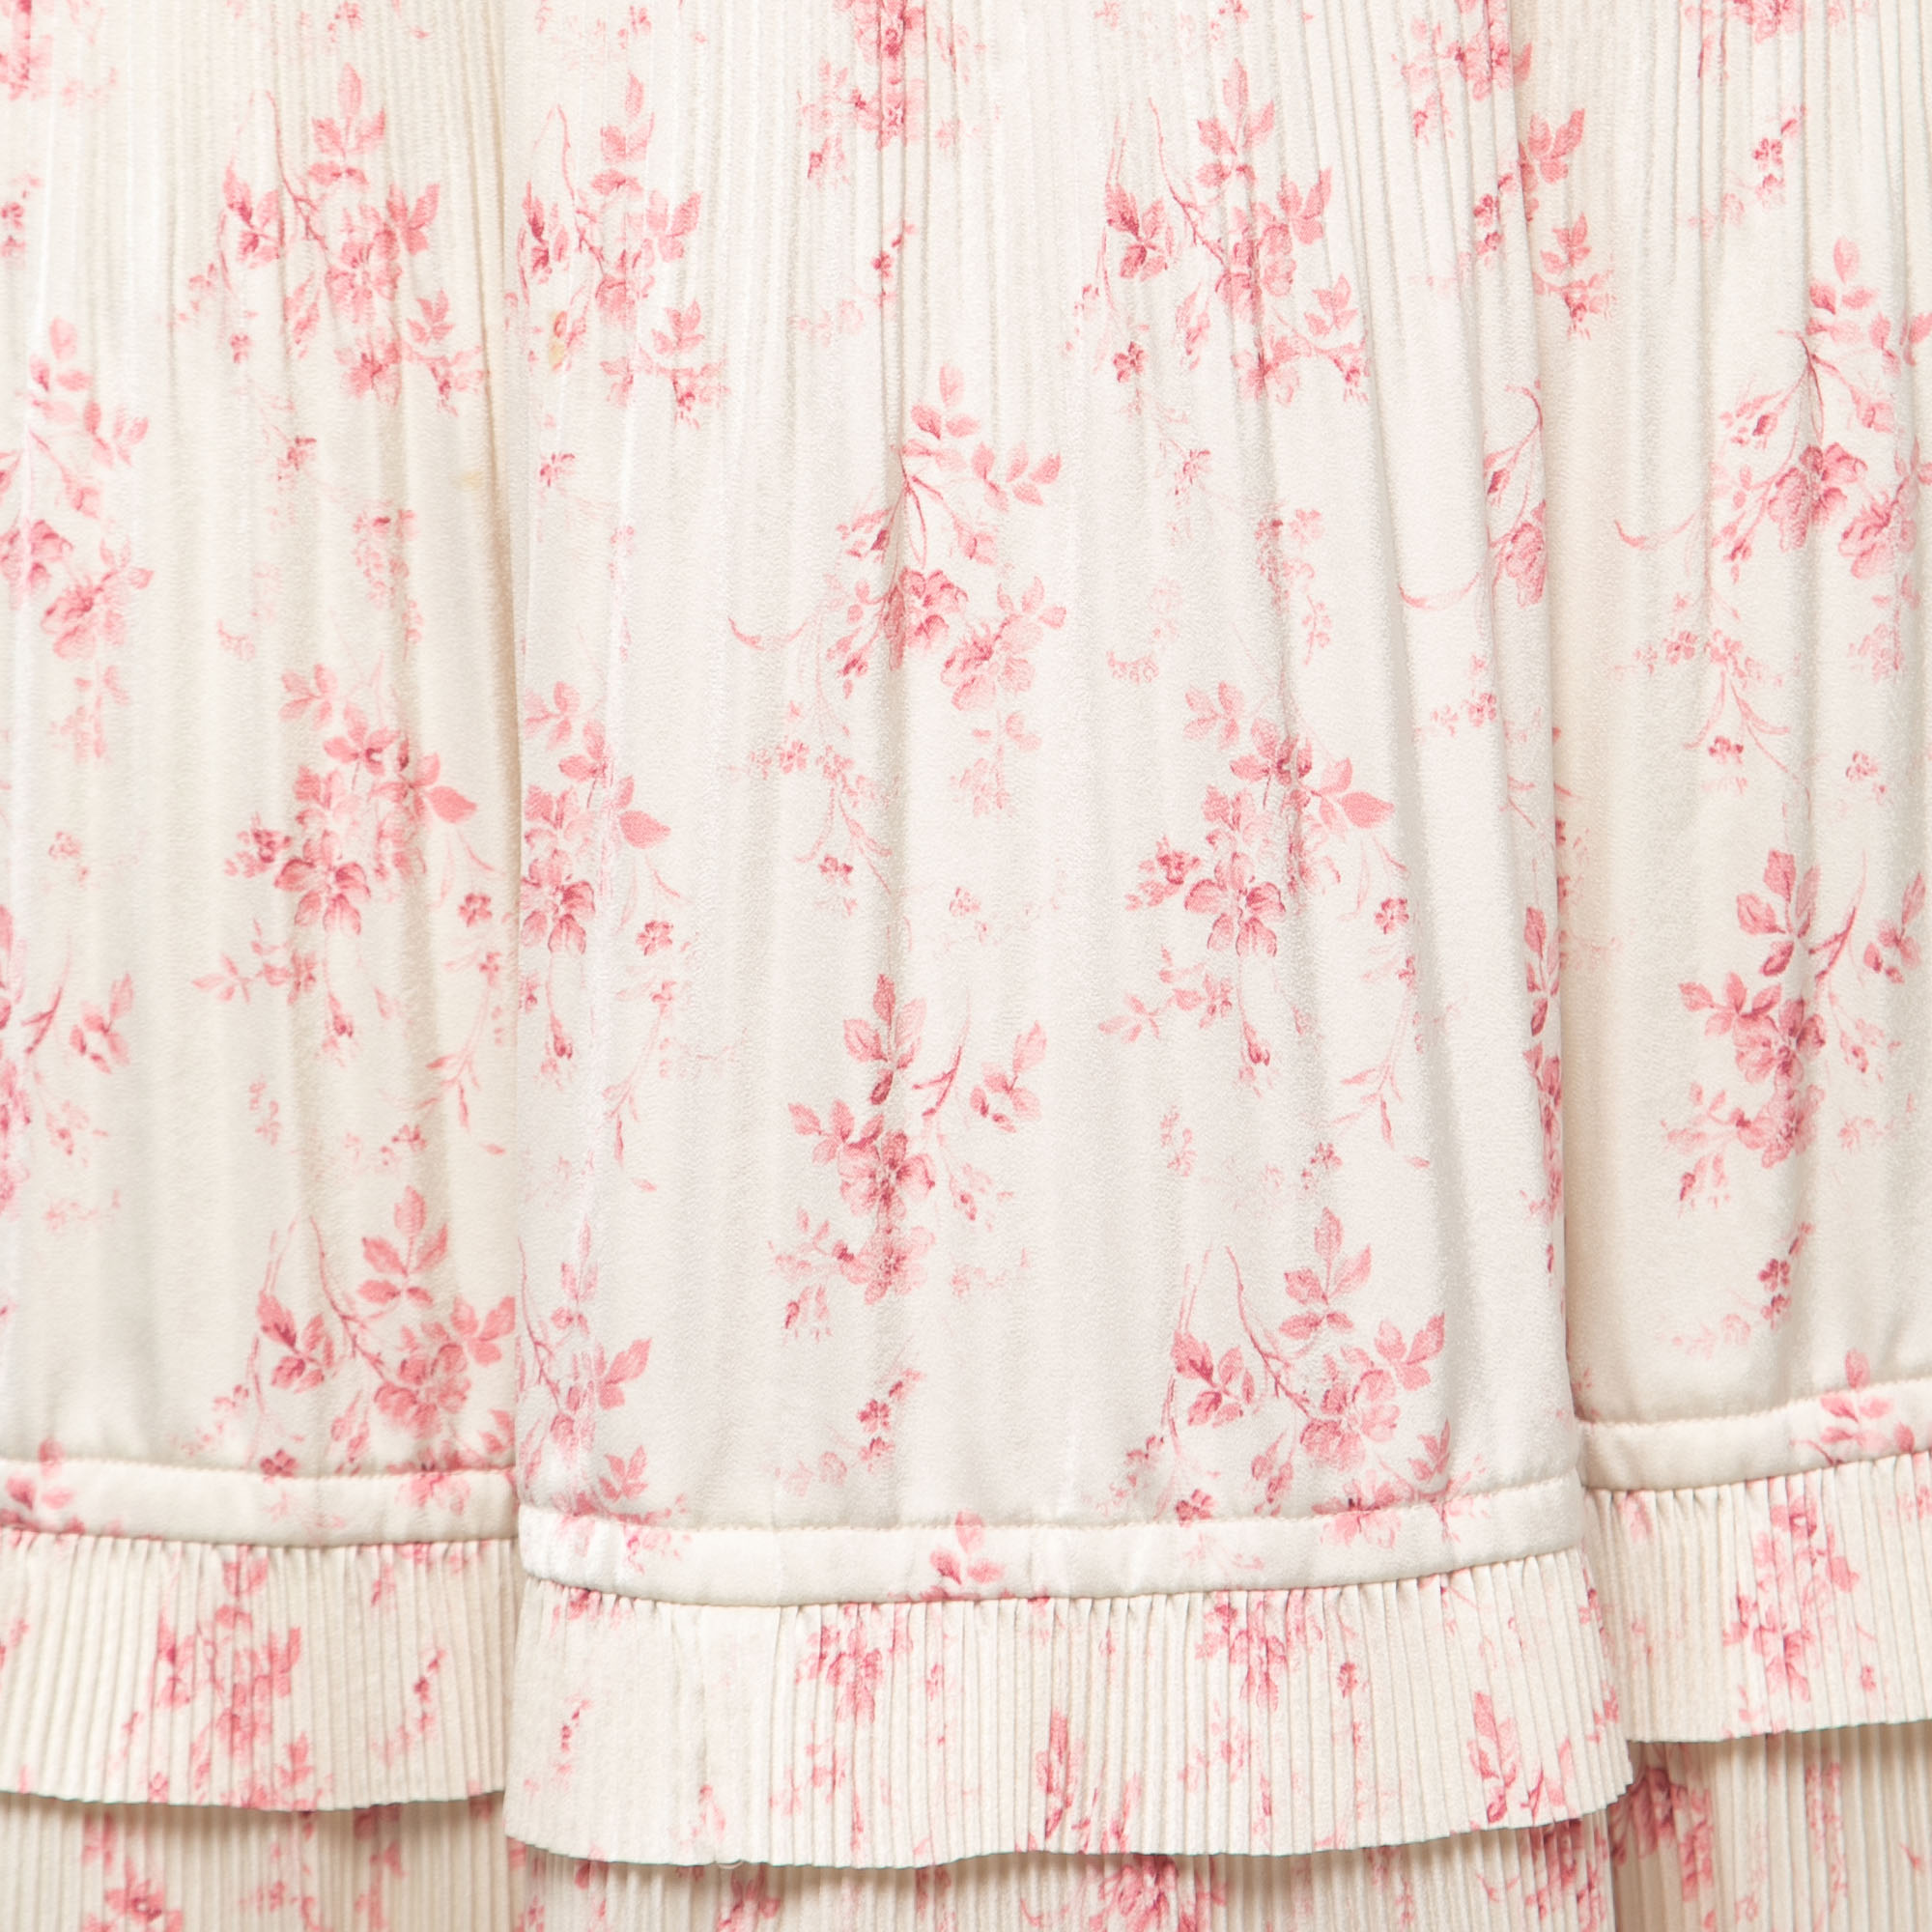 Polo Ralph Lauren Cream Floral Printed Plisse Satin Midi Skirt S